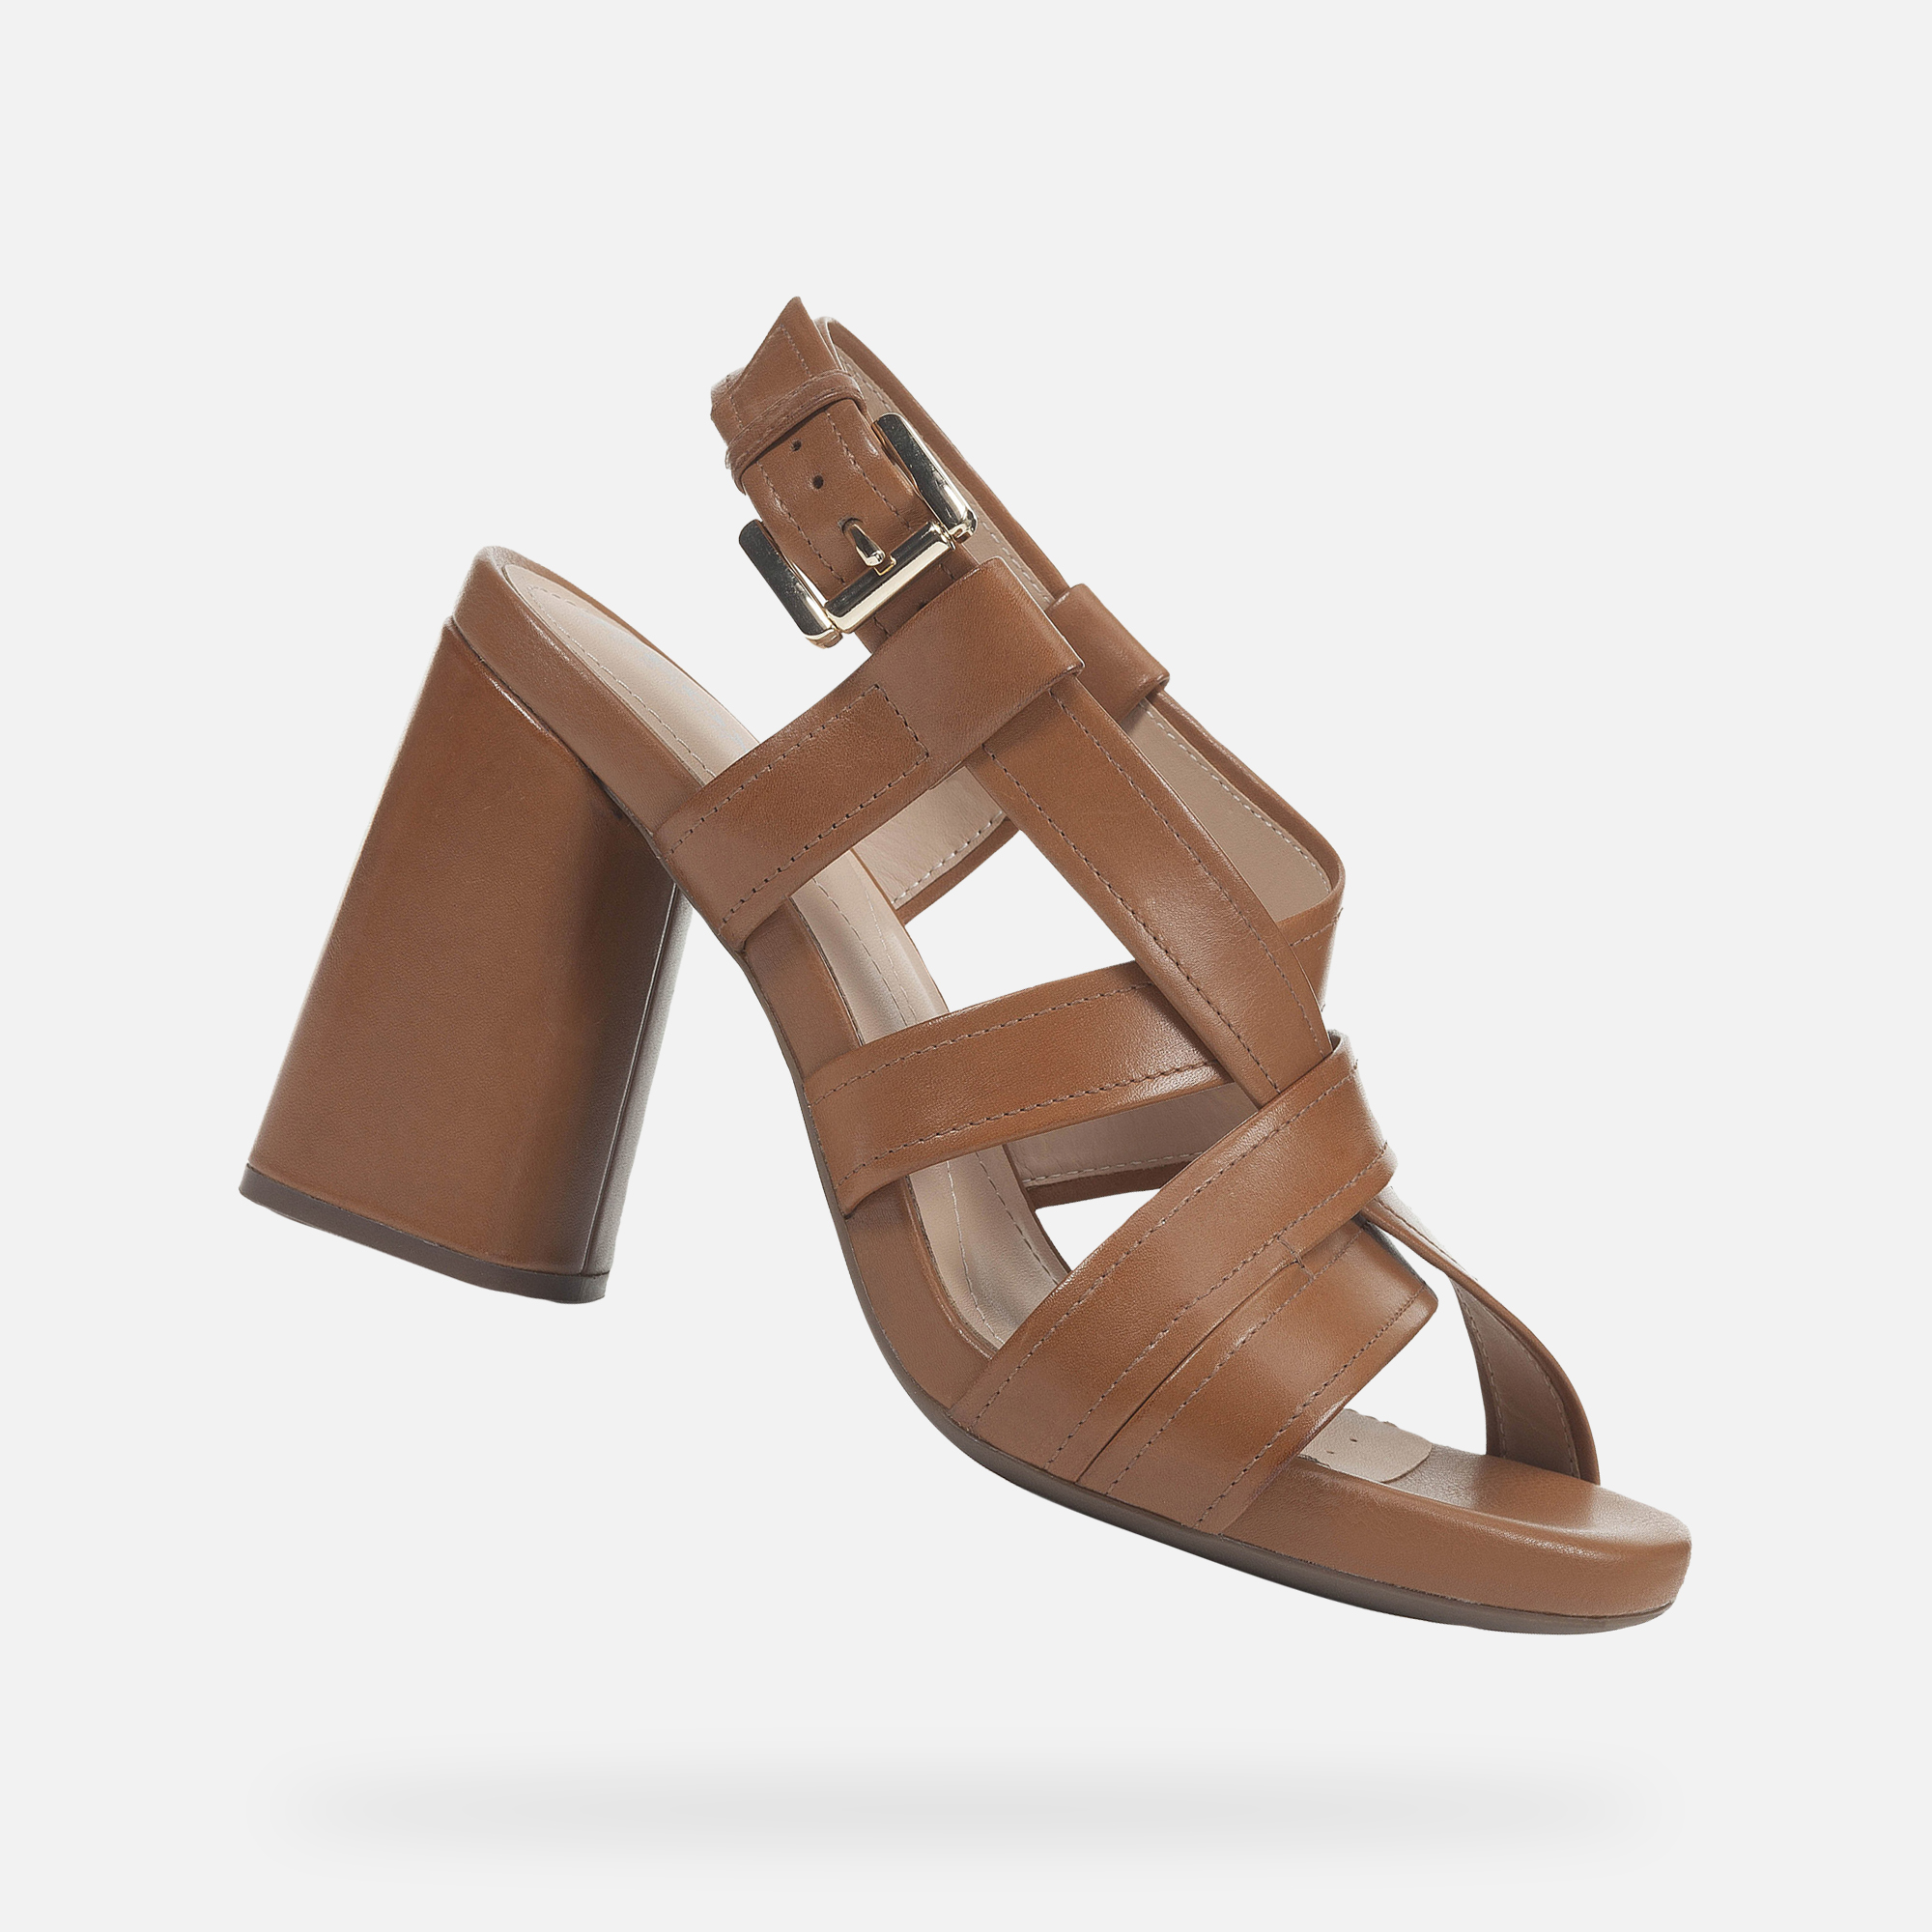 Geox GENZIANA Woman: Cognac Sandals | Geox ® Official Store